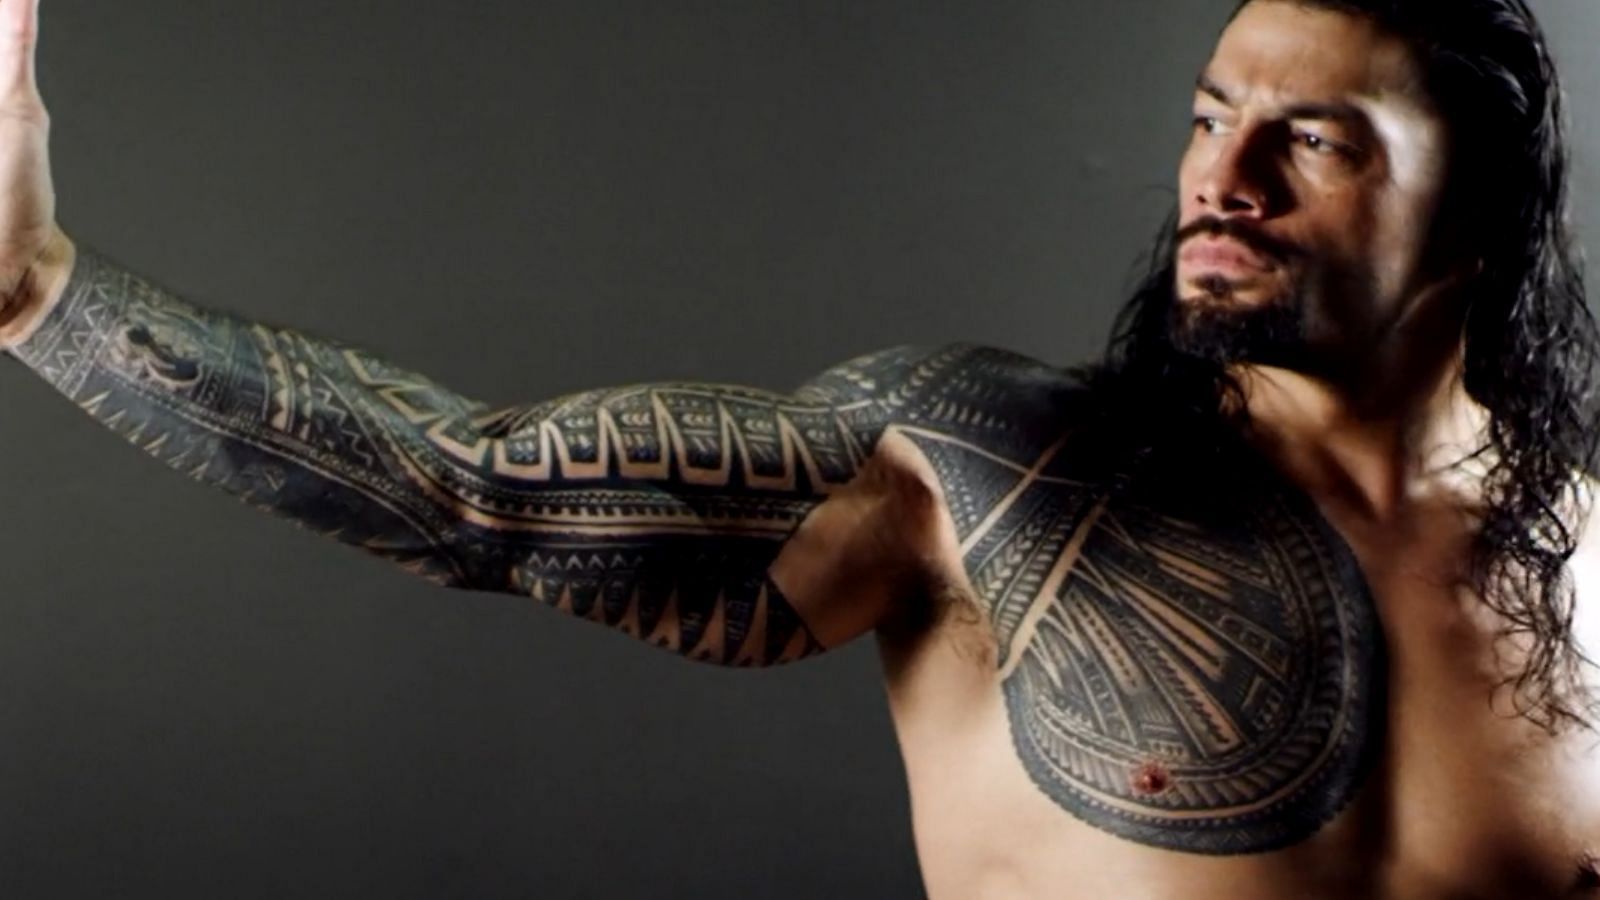 Roman Reigns body tattoo designs romanreigns  YouTube